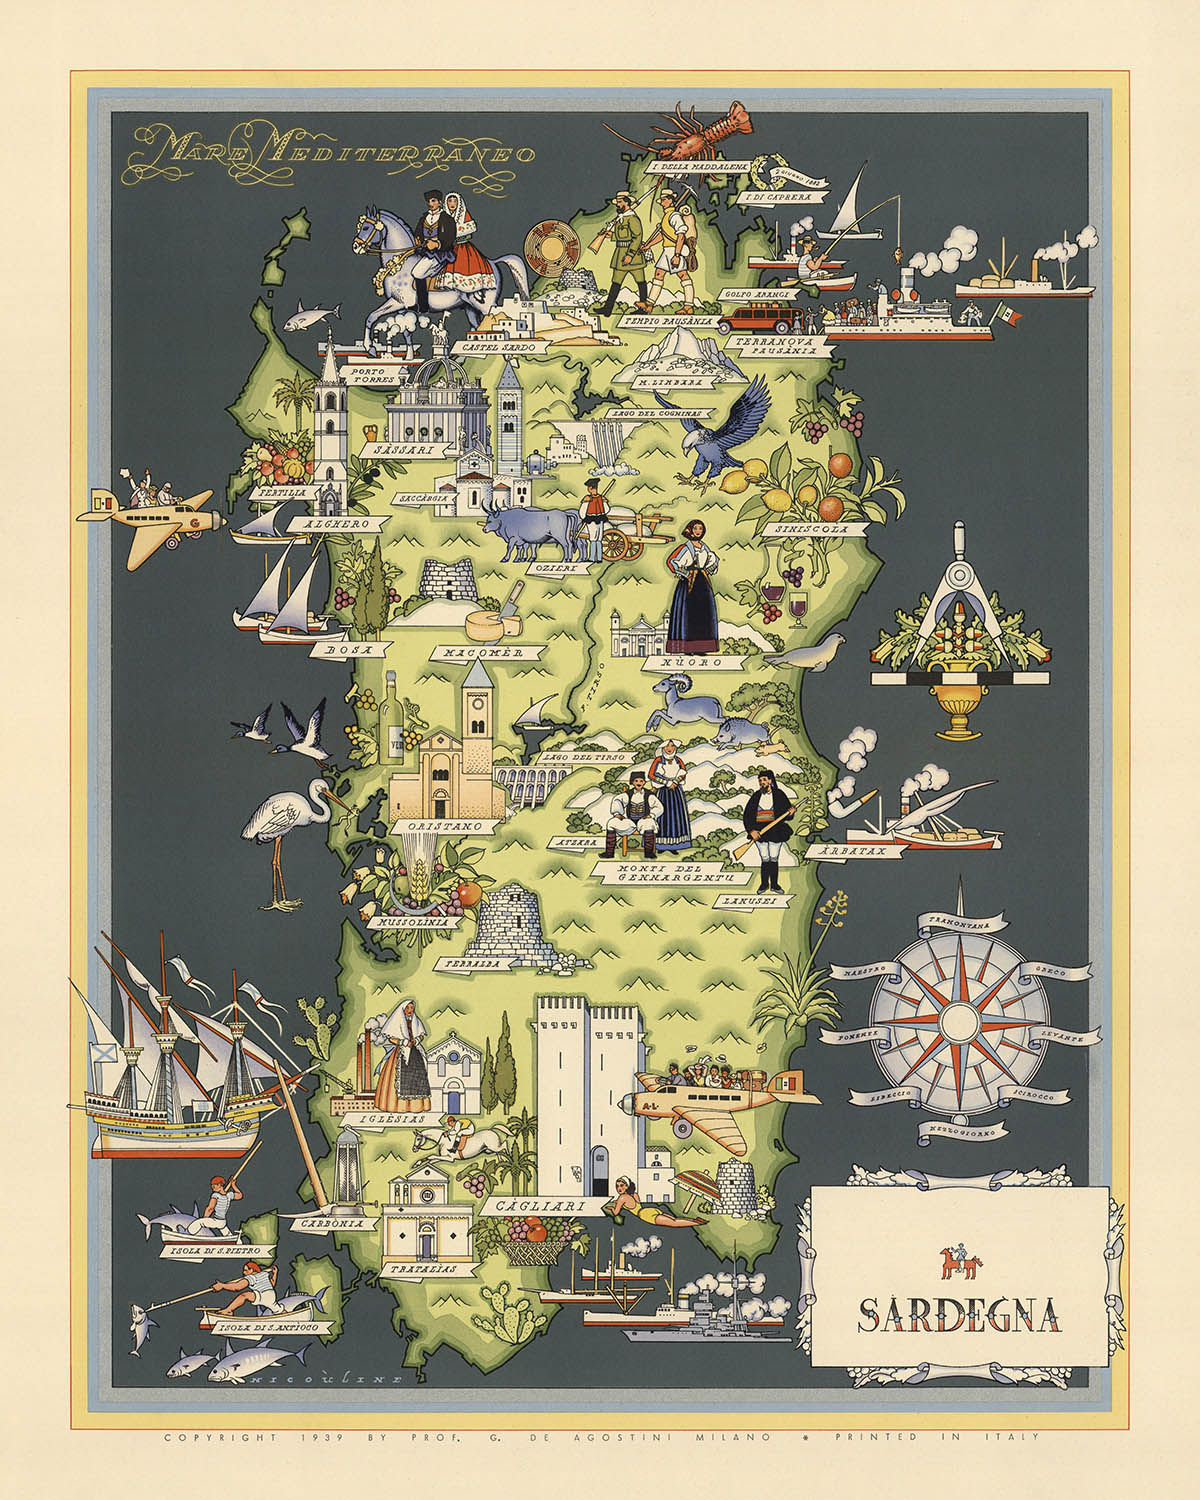 Alte Bildkarte von Sardinien von De Agostini, 1938: Cagliari, Sassari, Nuoro, Oristano, Olbia